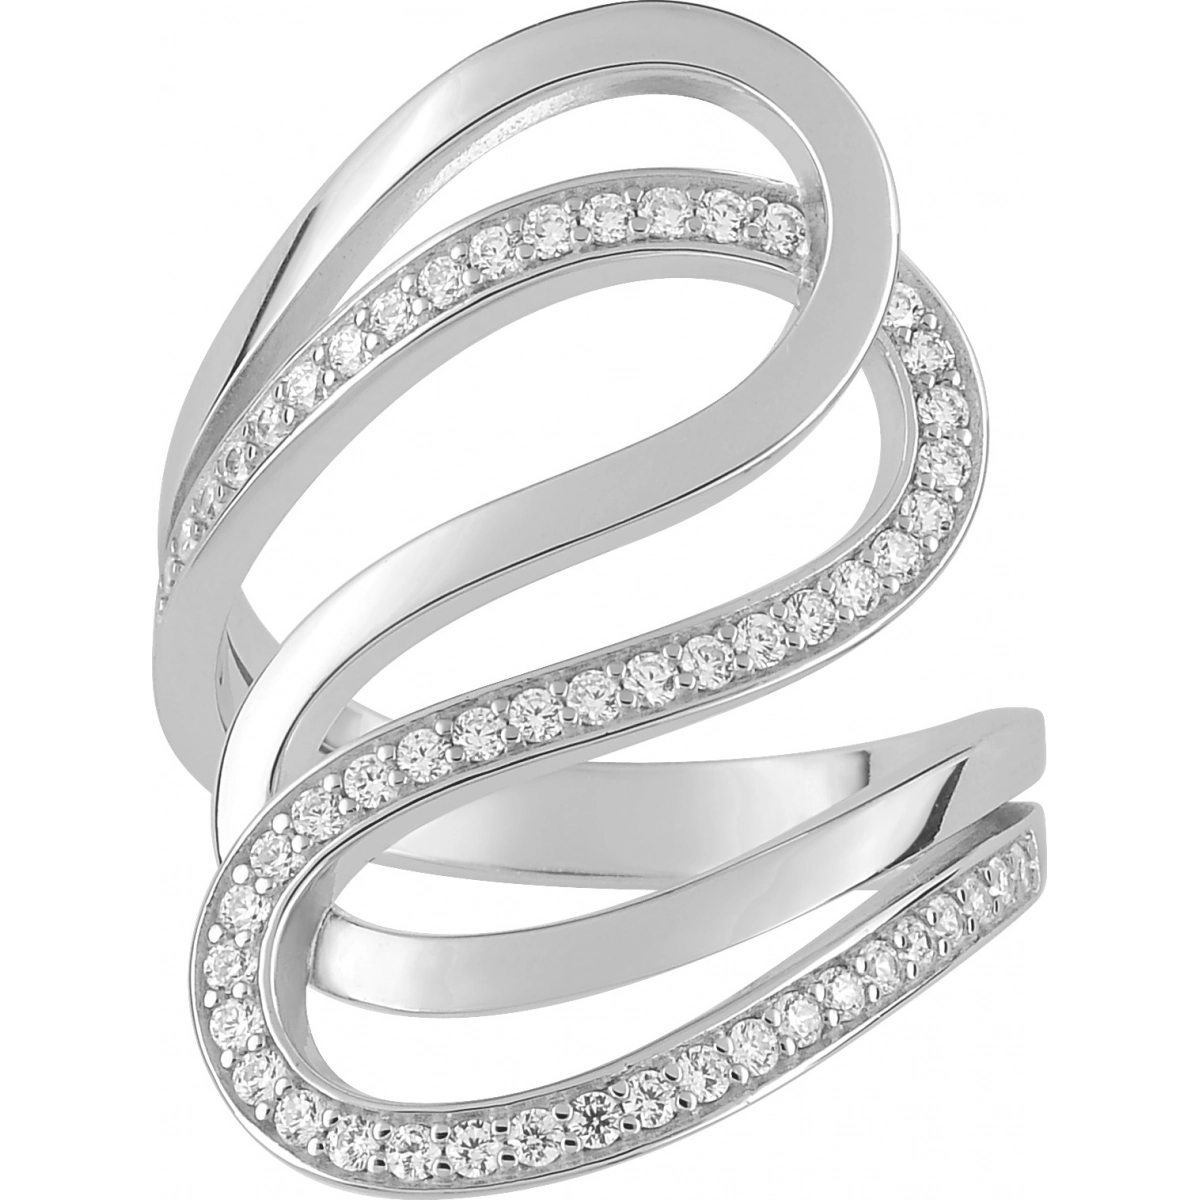 Ring w. cz rh925 Silver Lua Blanca  T33.51885 - Size 51